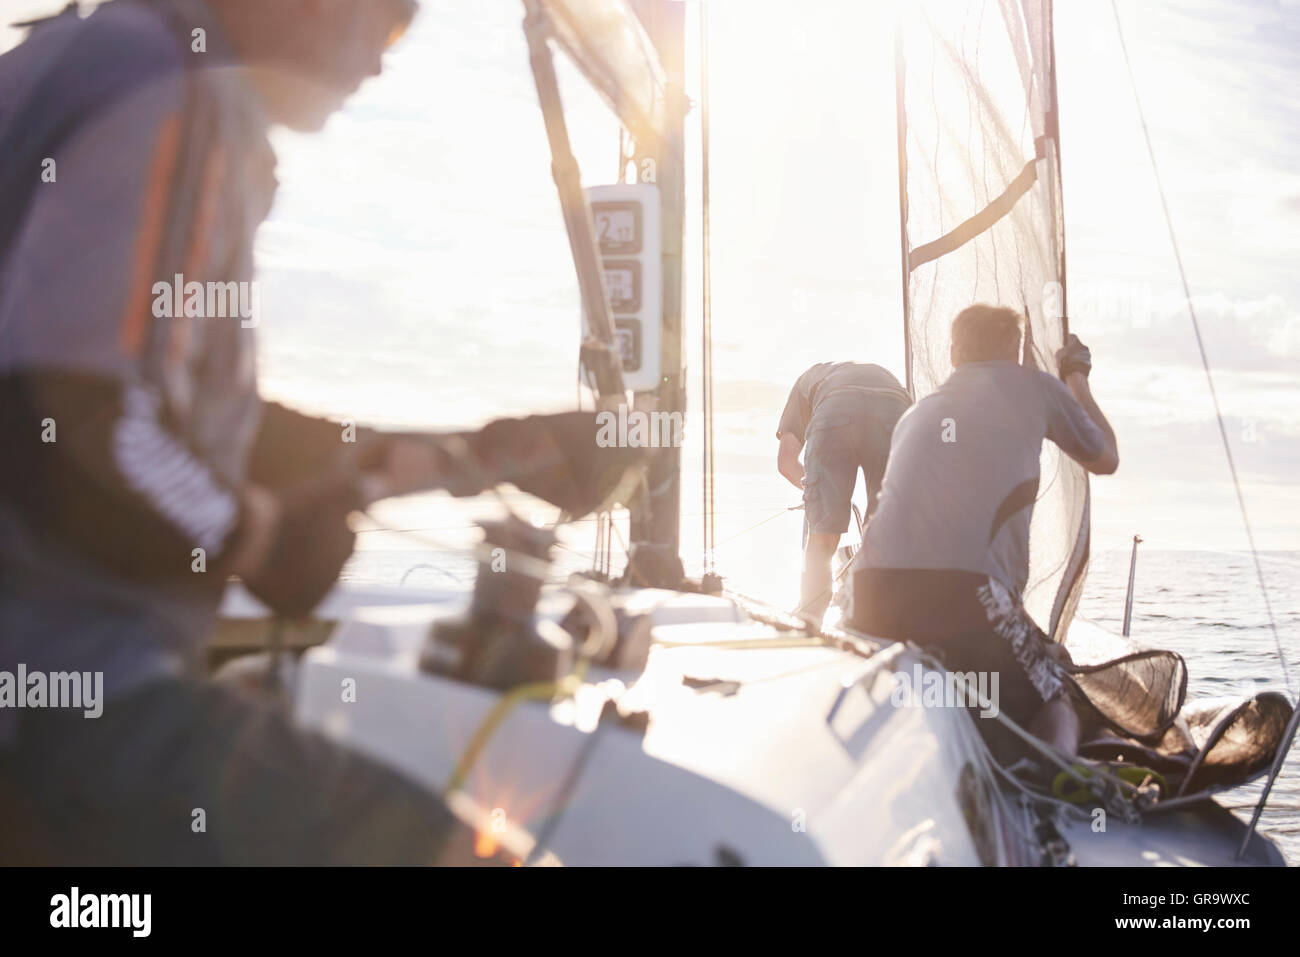 Men adjusting sailing equipment on sailboat Stock Photo